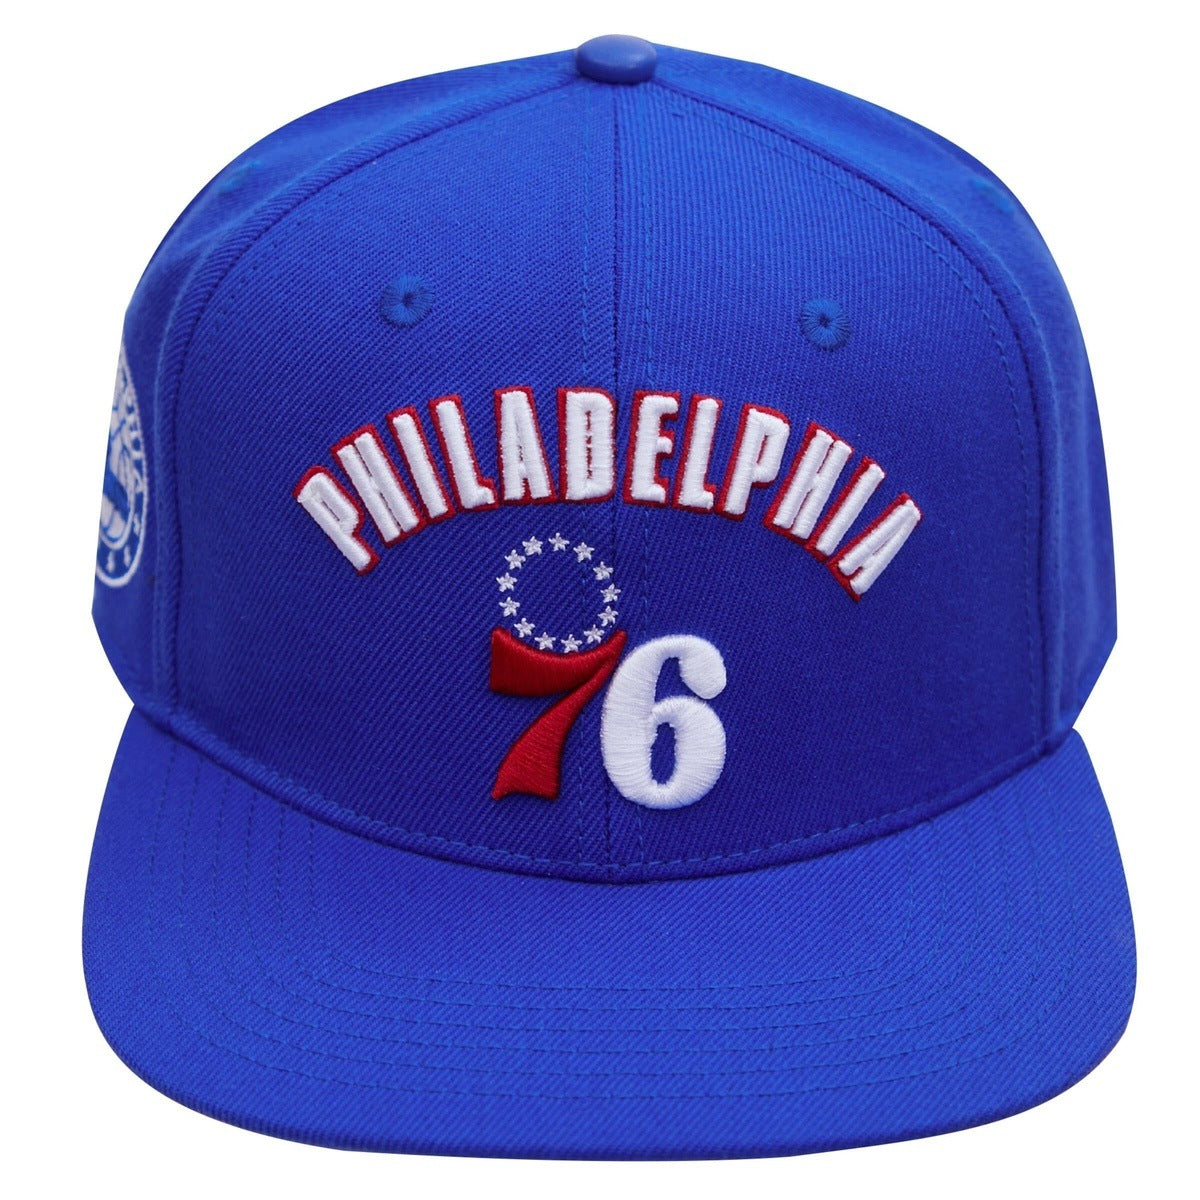 NBA PHILADELPHIA 76ERS STACKED LOGO WOOL UNISEX SNAPBACK HAT (ROYAL BLUE)